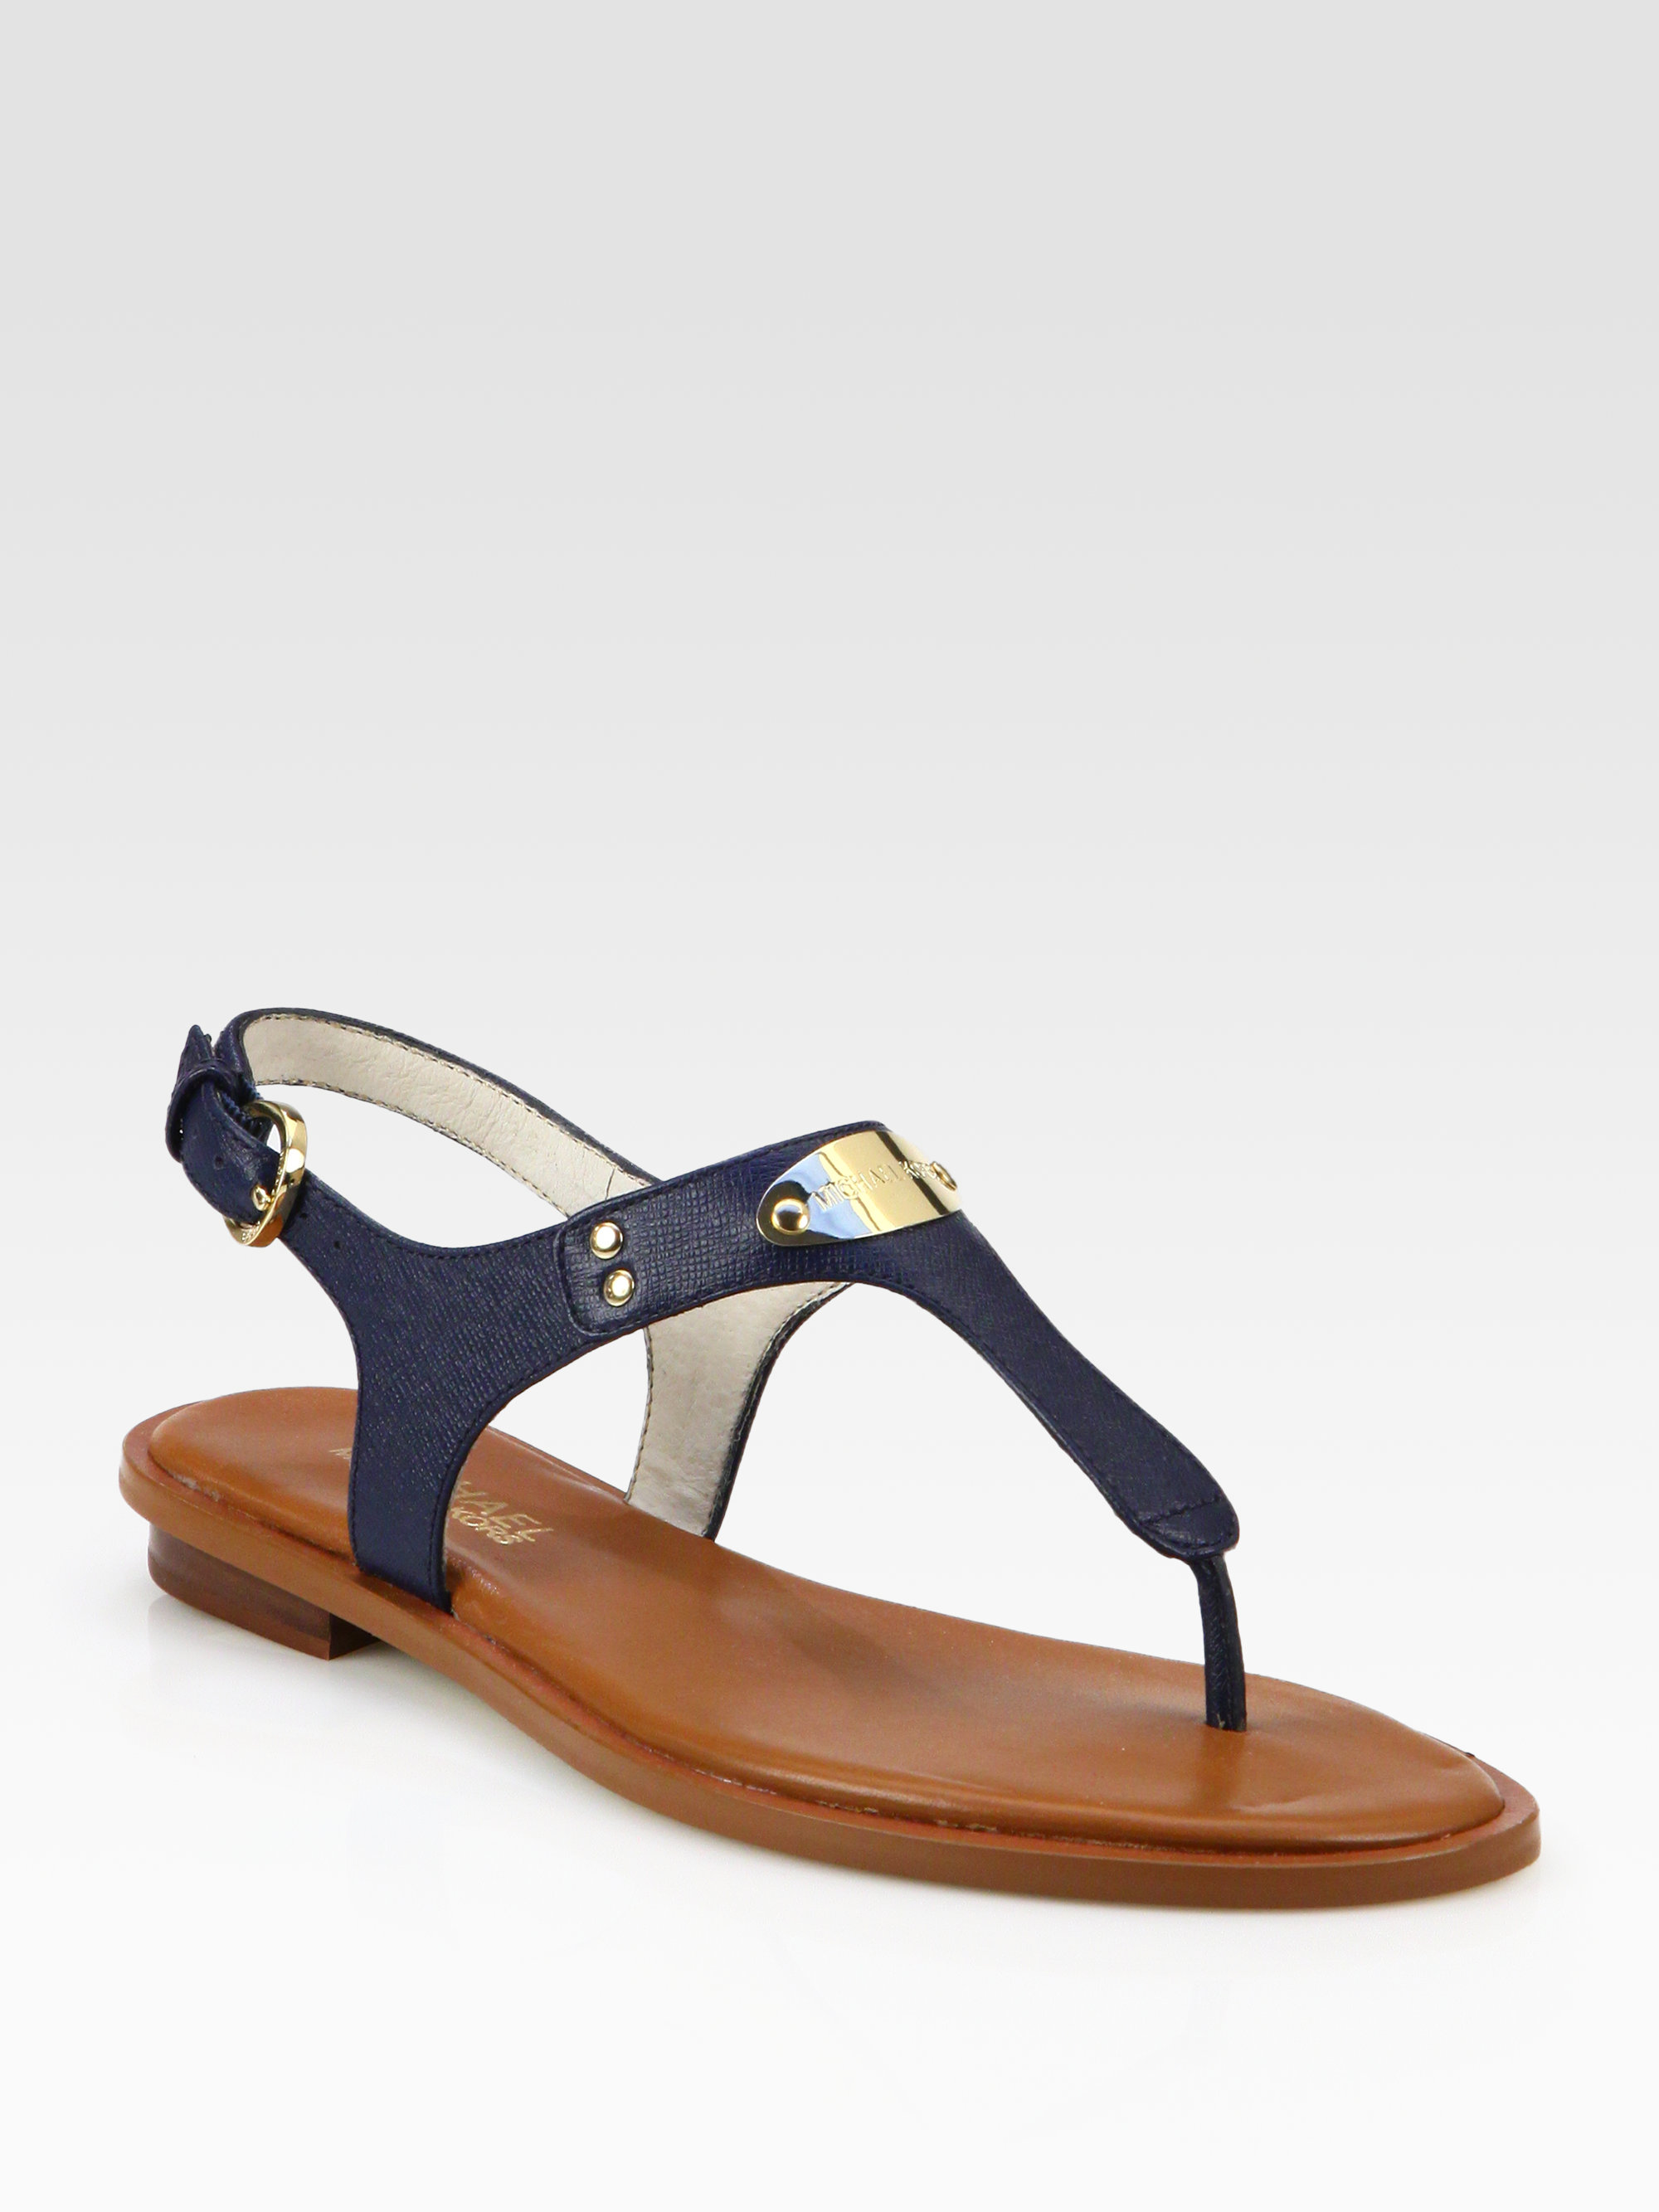 michael kors sandals navy blue